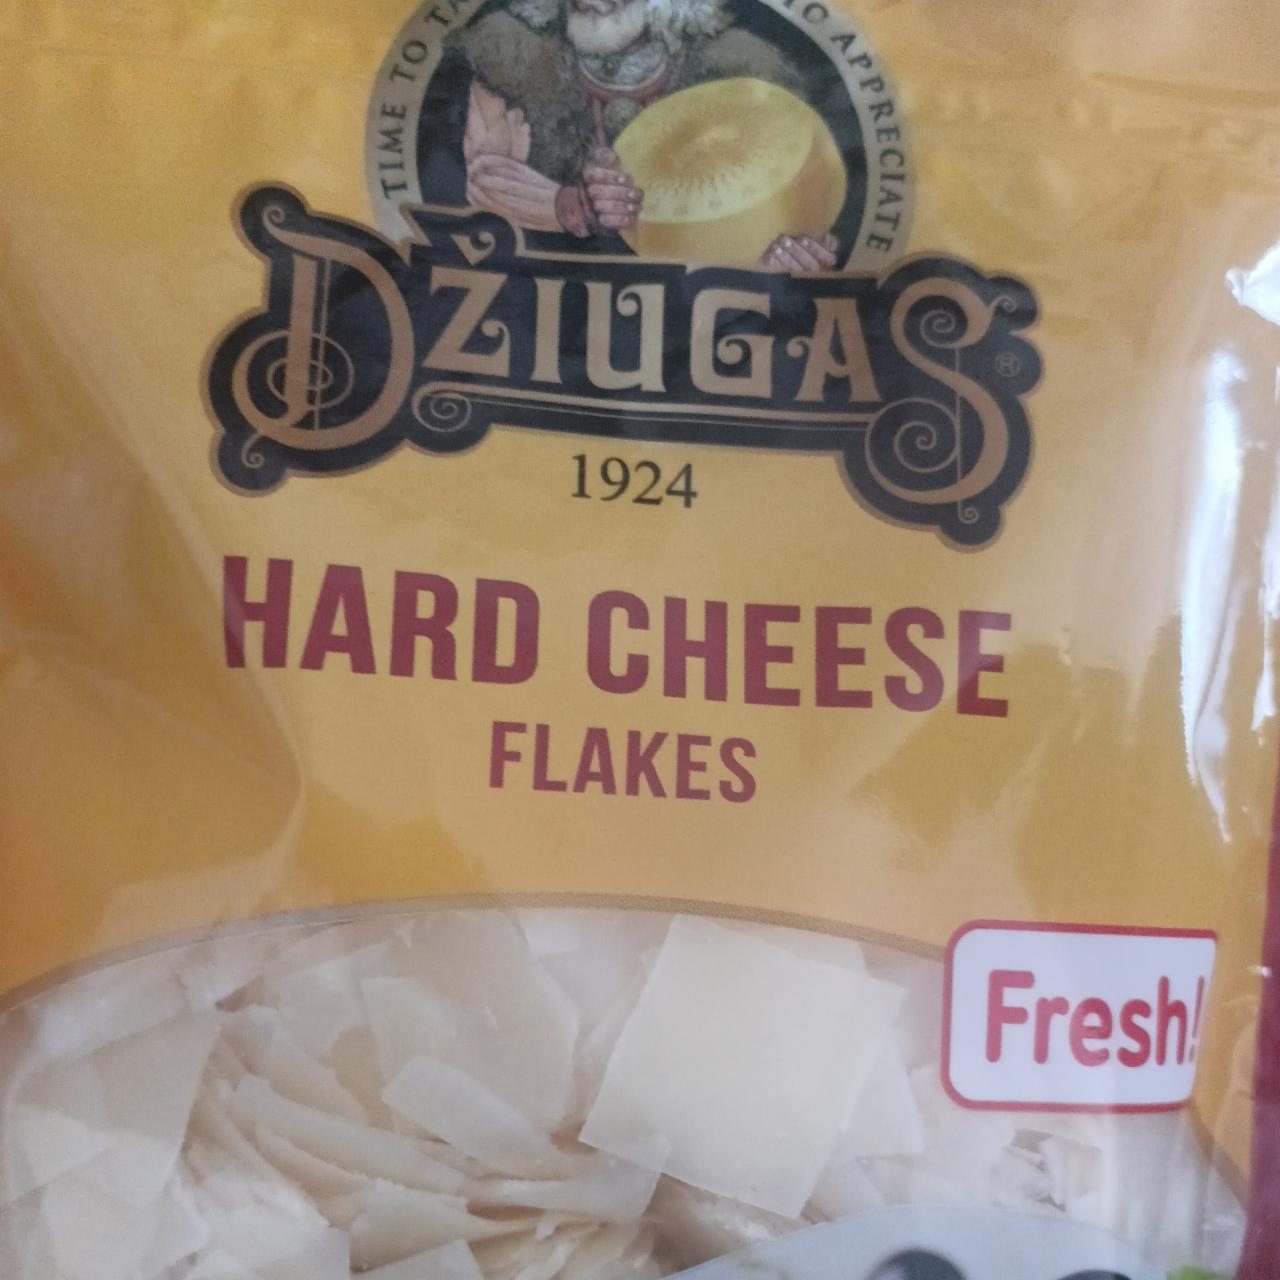 Zdjęcia - Hard cheese flakes Džiugas